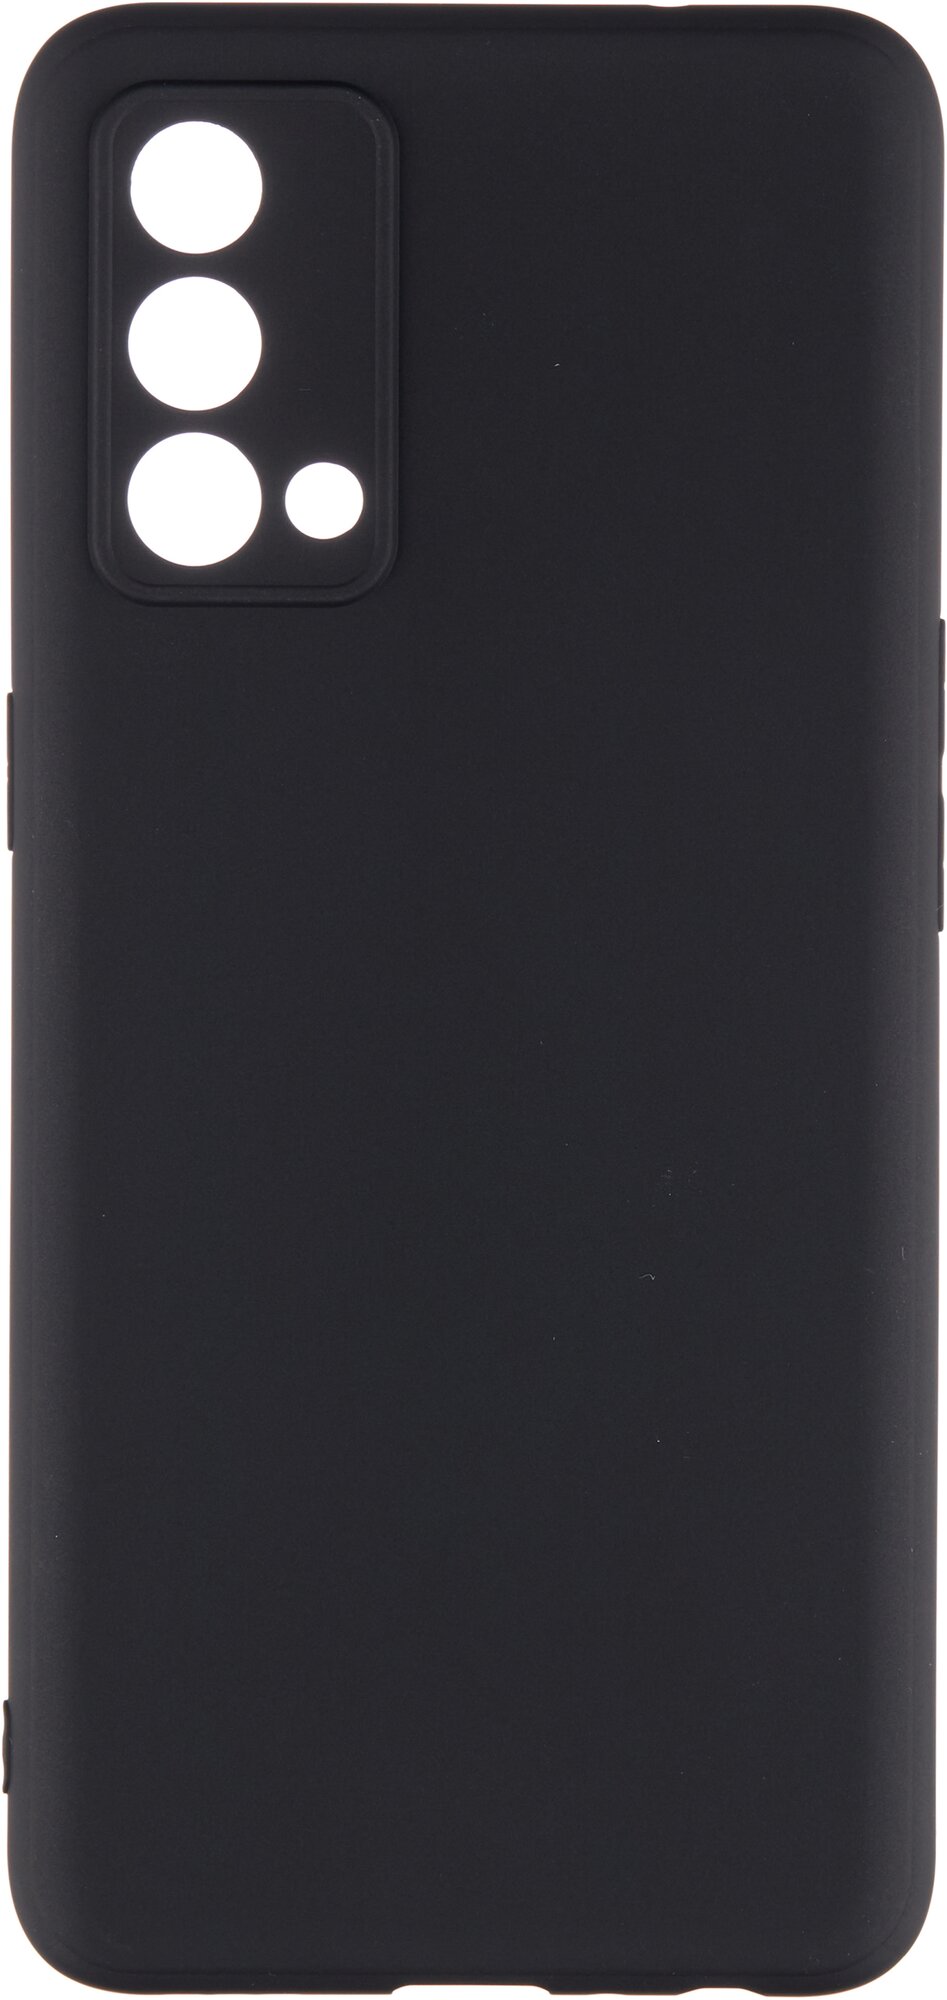 Чехол накладка для Realme GT Master Edition, G-Case Silicone, черная